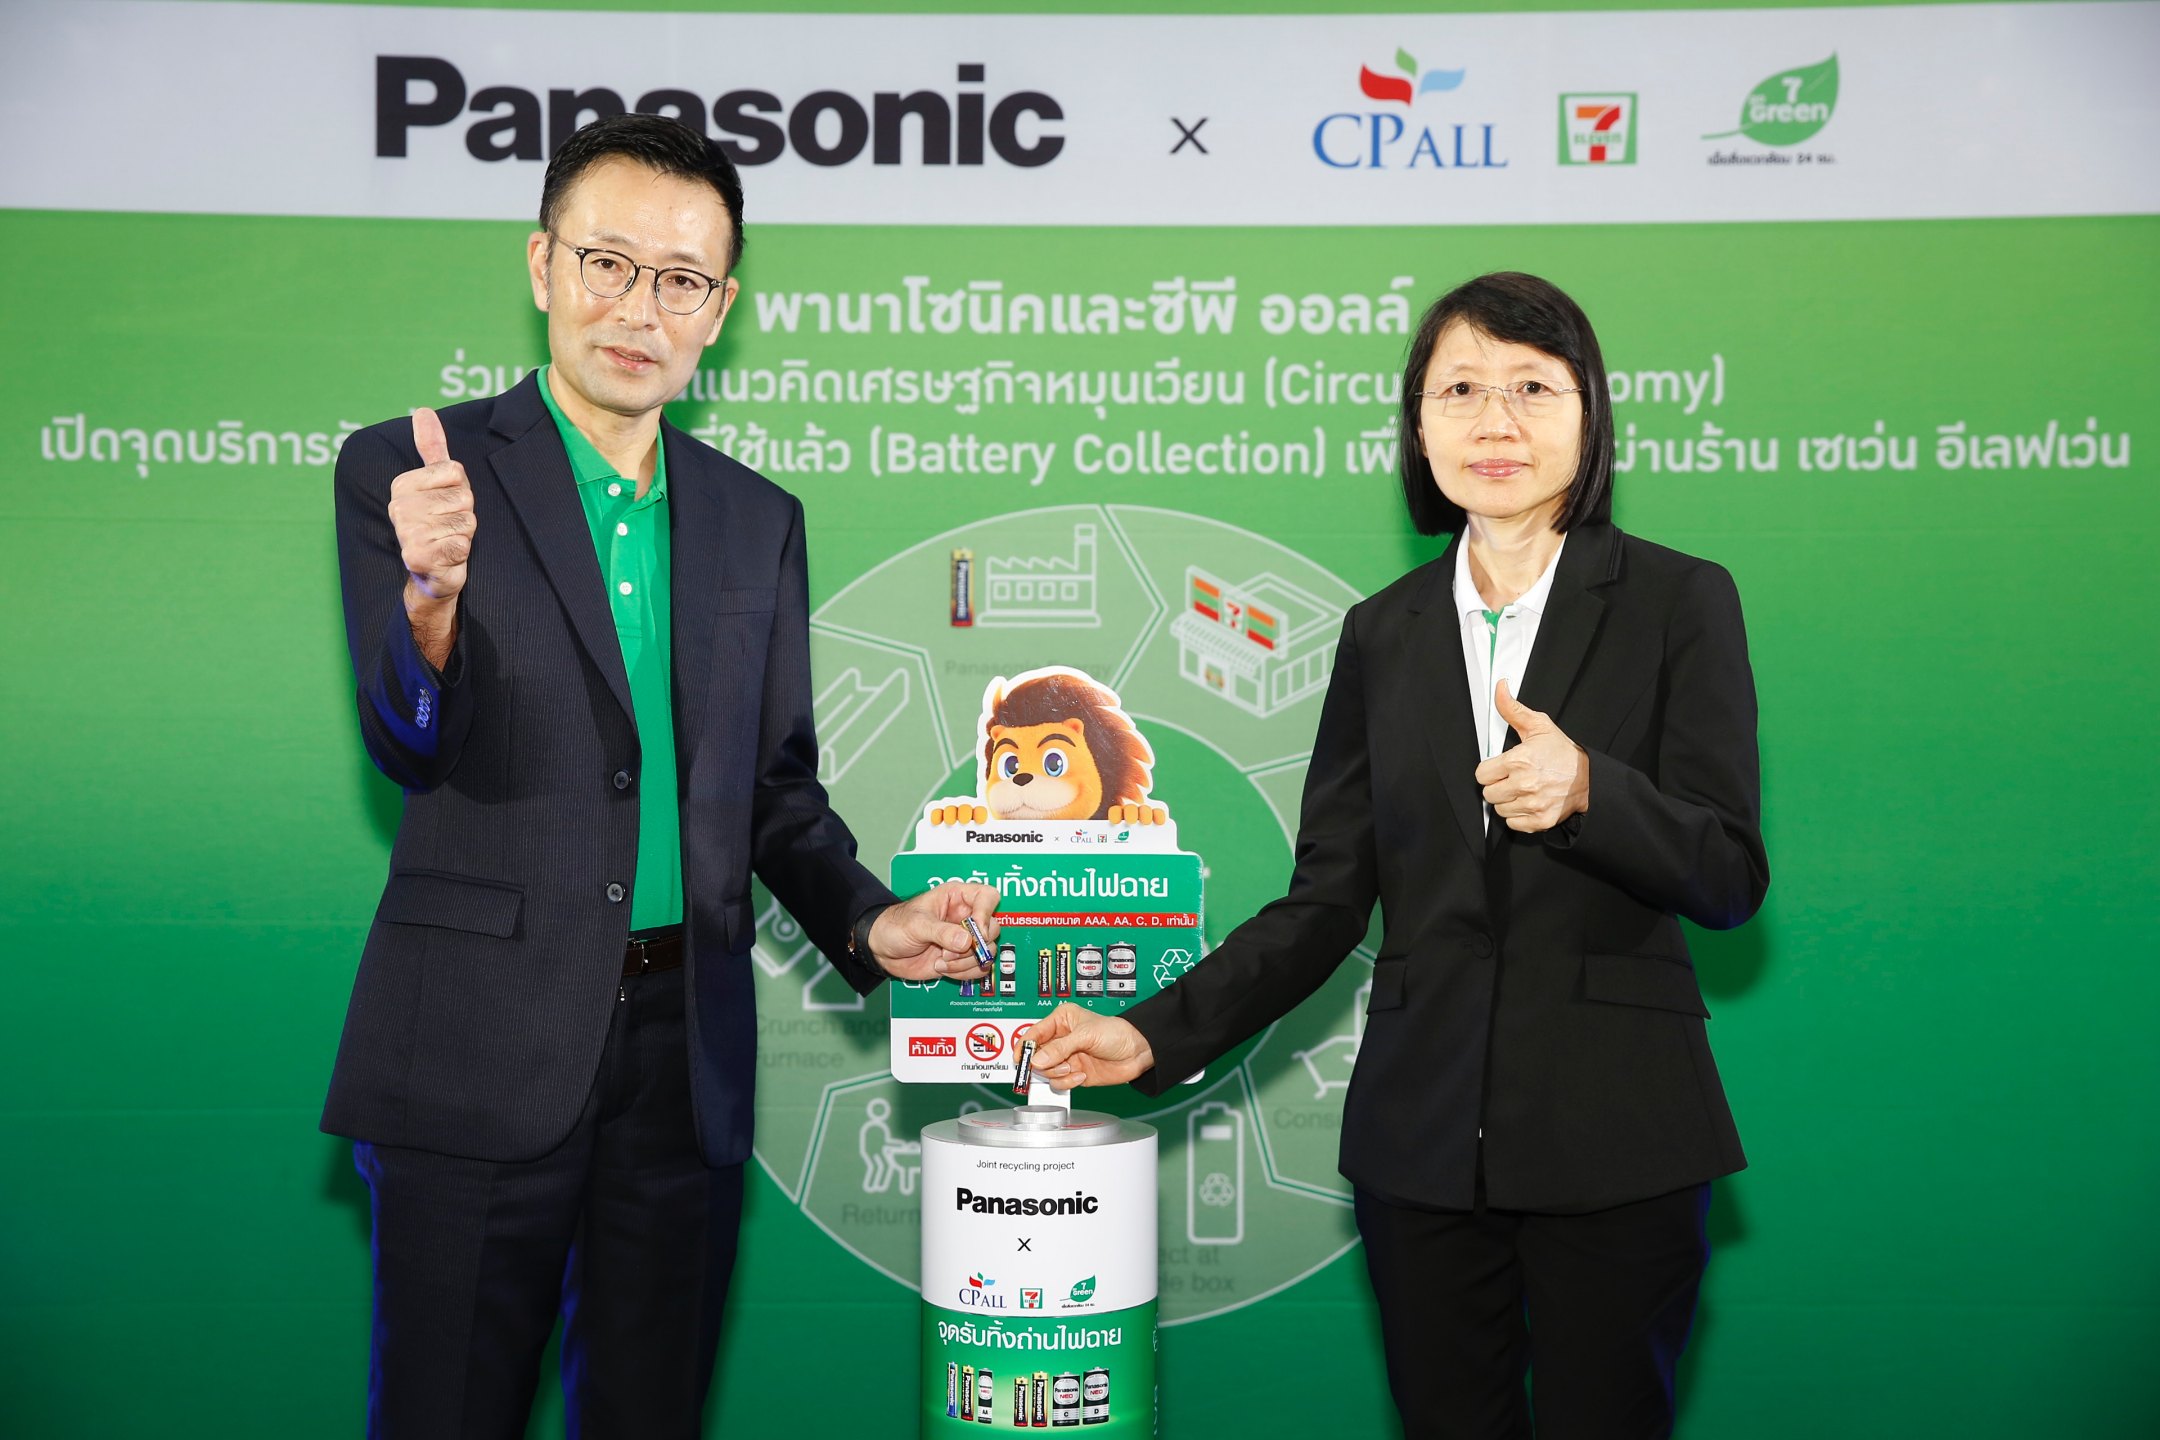 Panasonic-CPALL-Battery Collection-มาซาโอะ  ซาซาดะ-อภิญญา บัญญัติทัศไนย